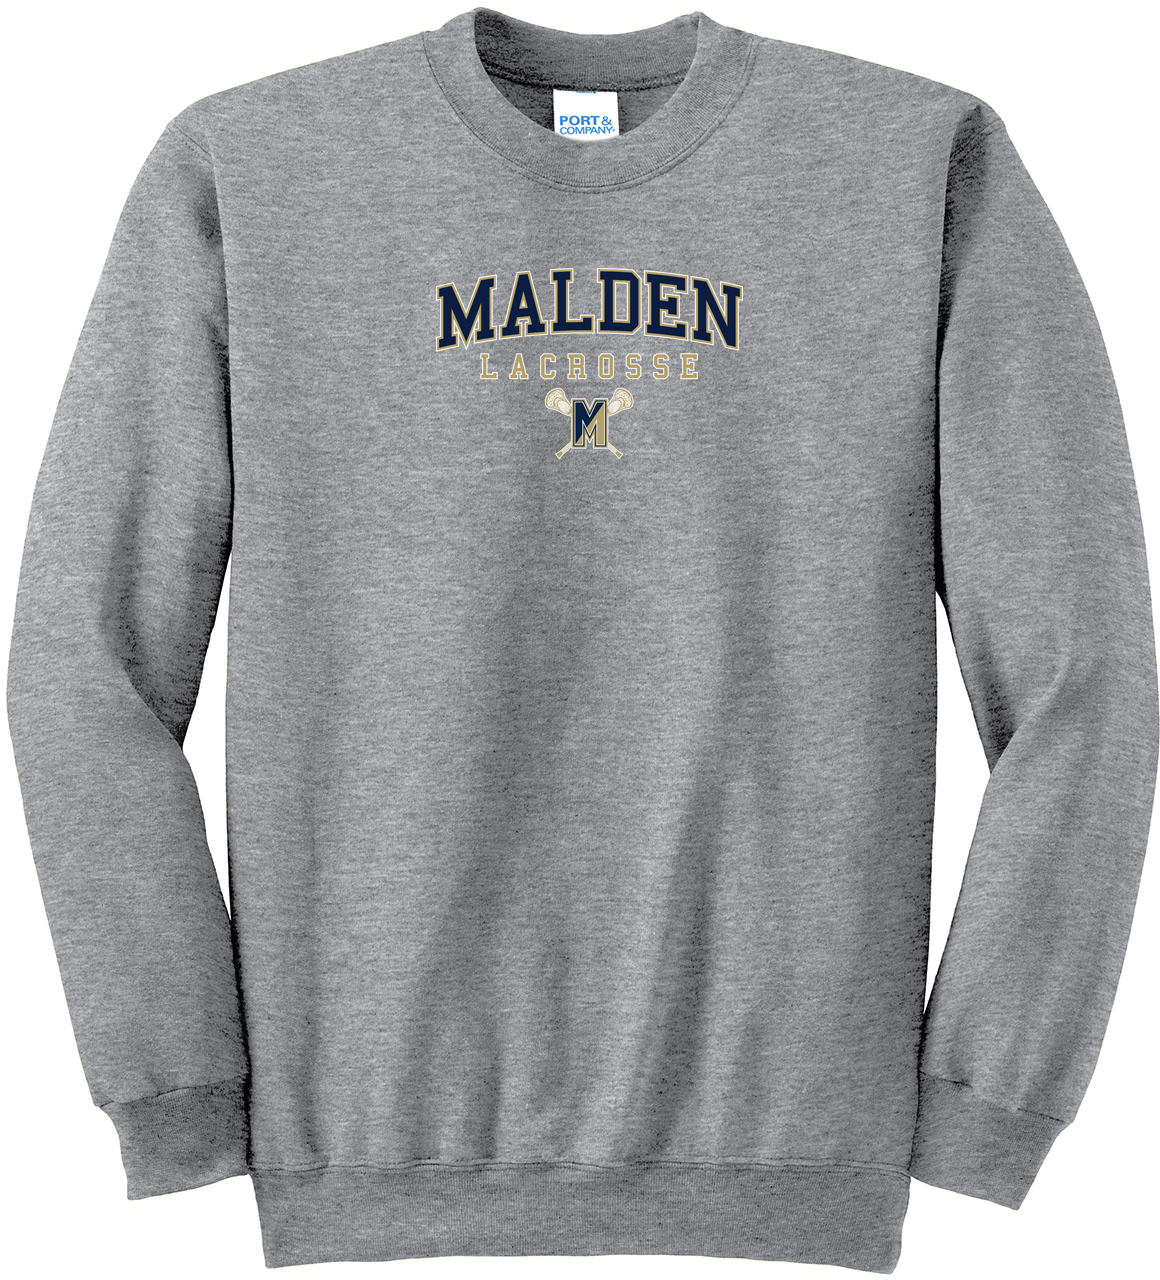 Malden Lacrosse Crew Neck Sweater